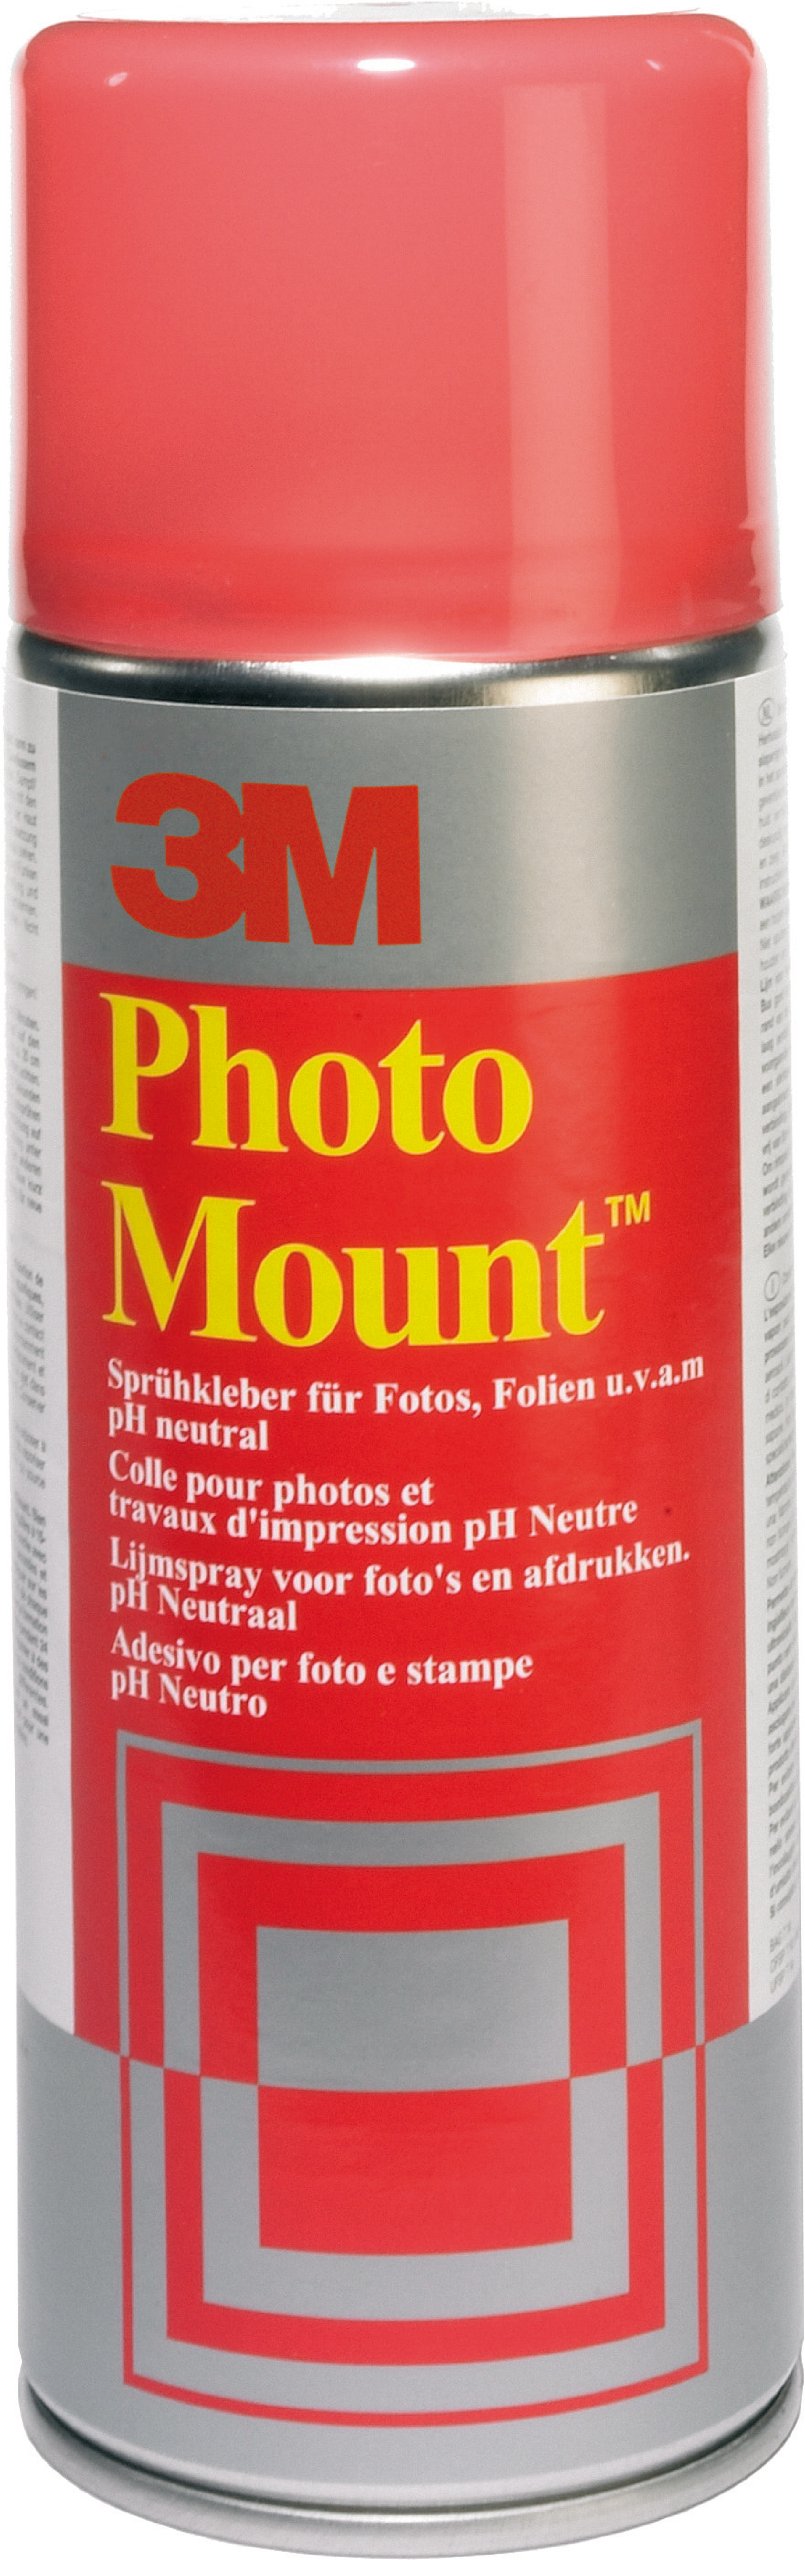 Colla spray 3M photo mount permanente 400 ml